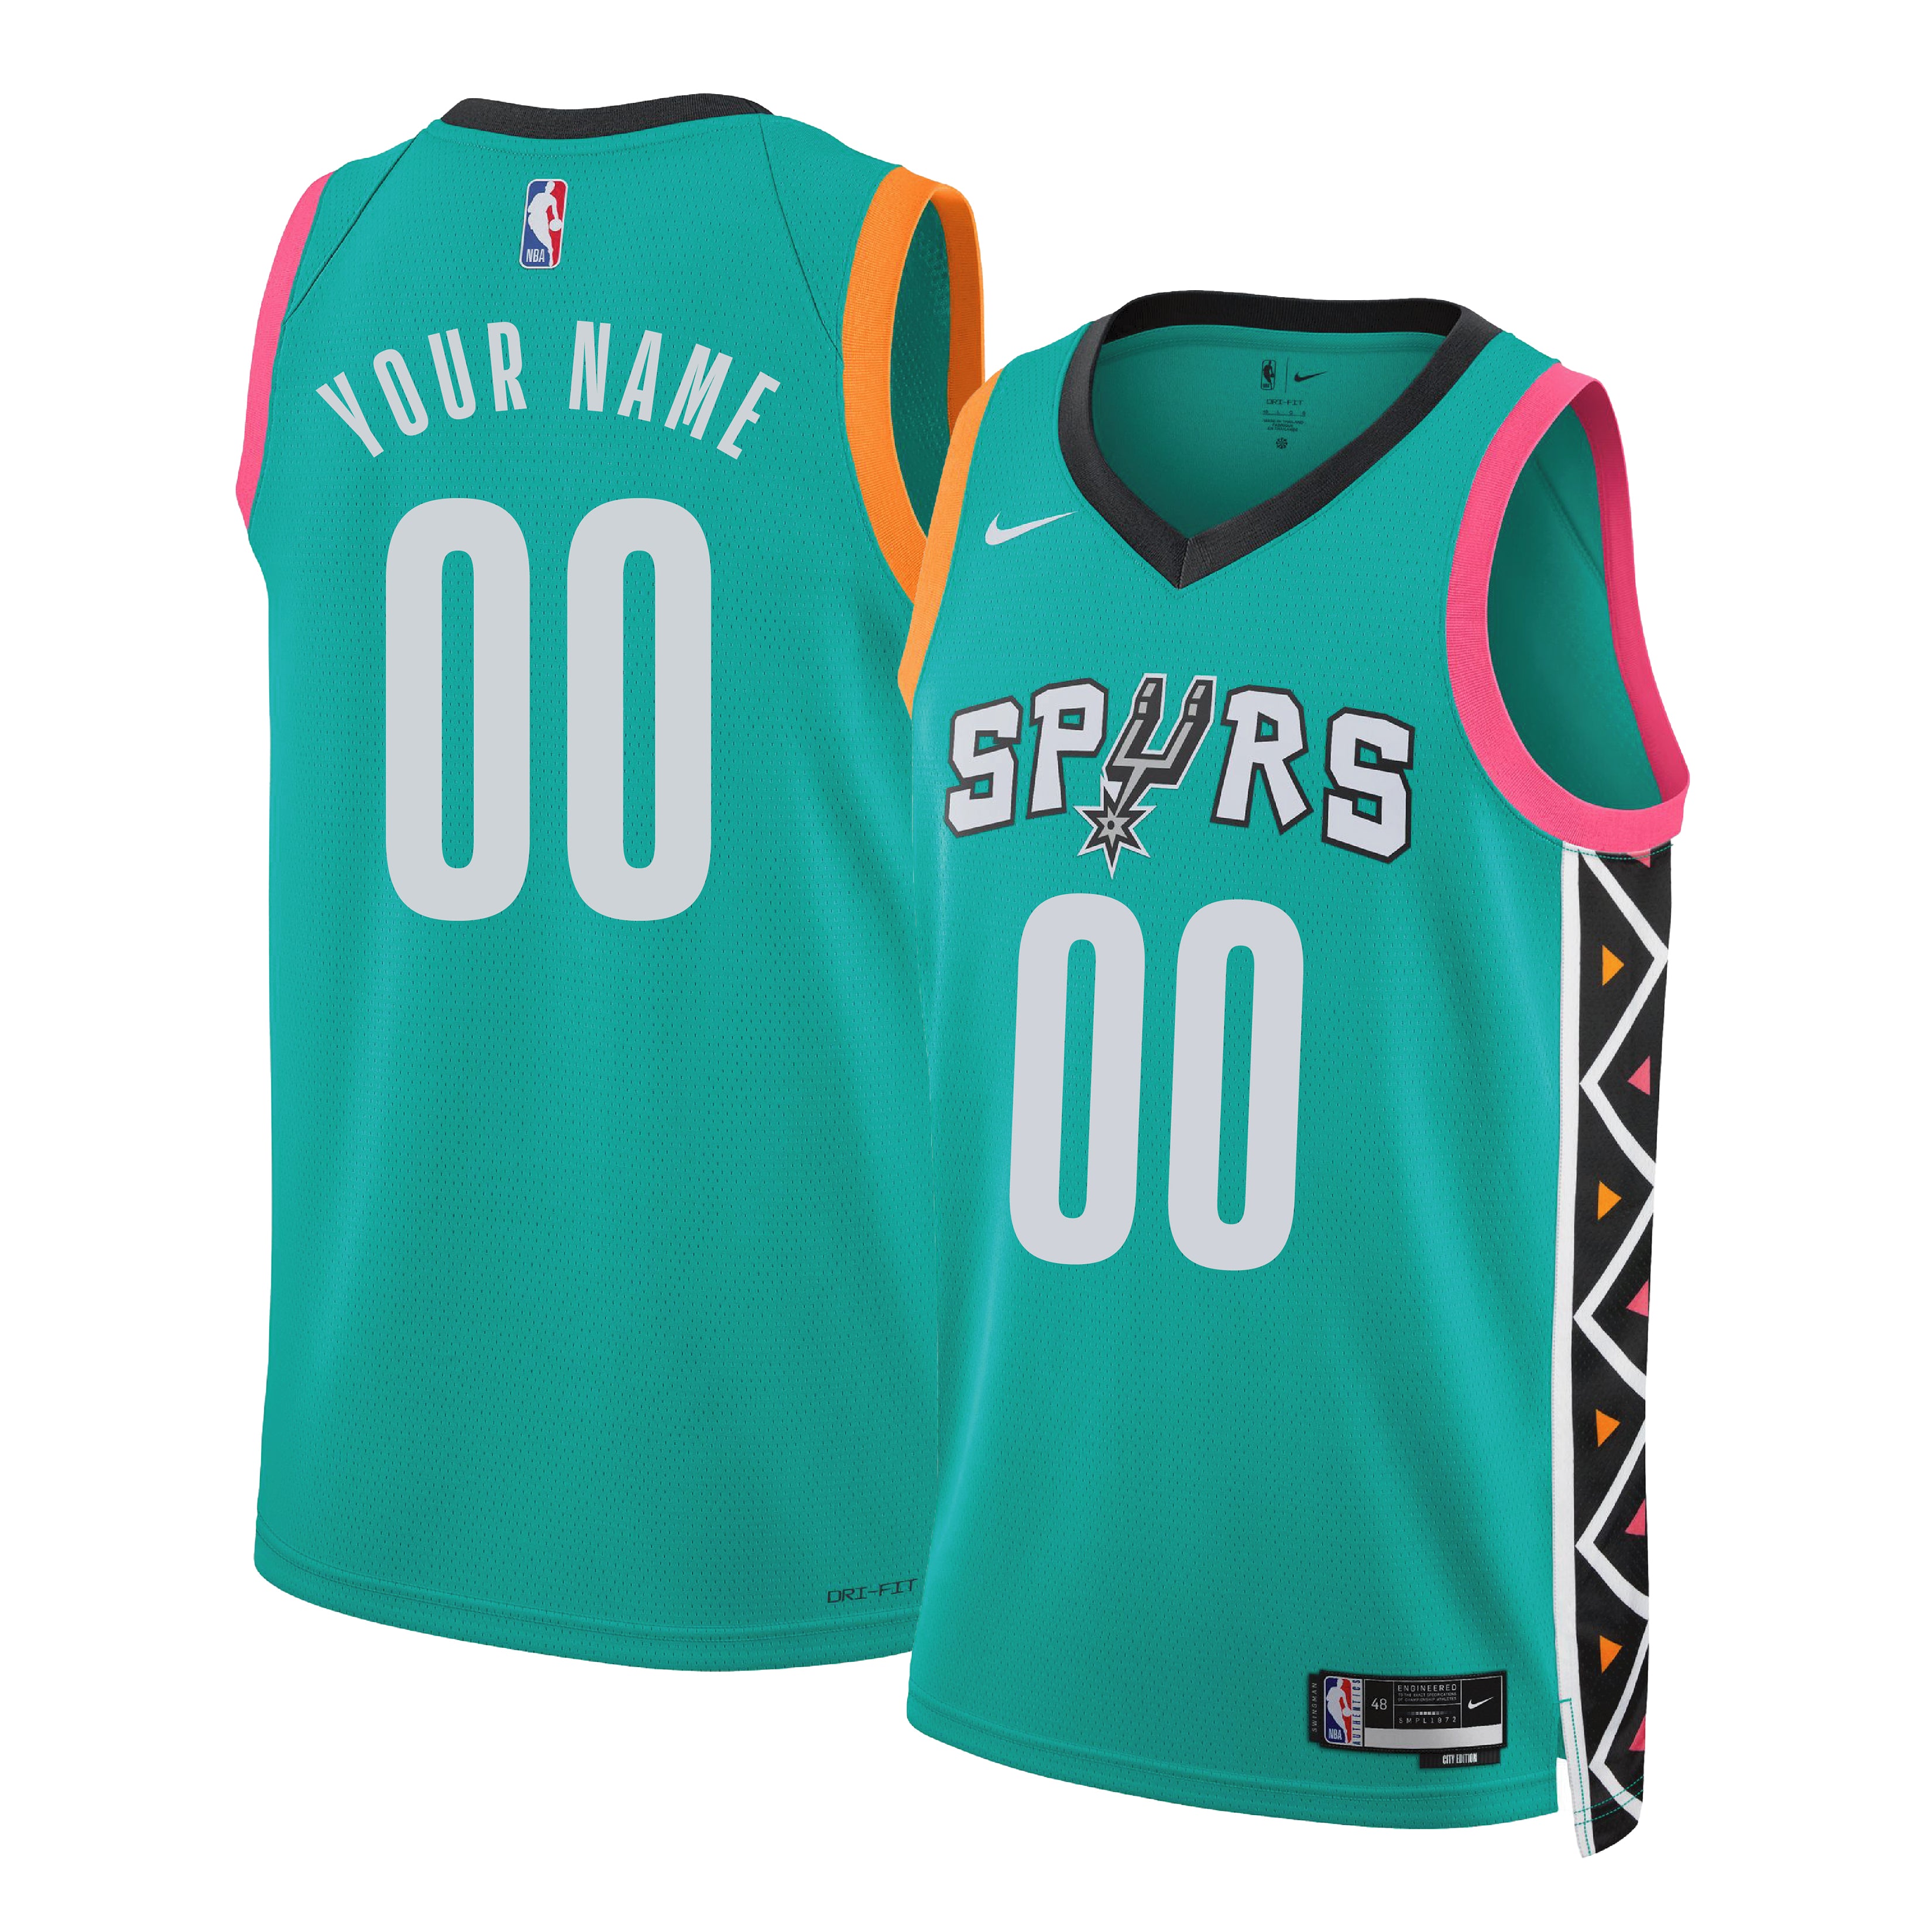 San Antonio Spurs Women's NBA Team apparel shirt XXL L/S